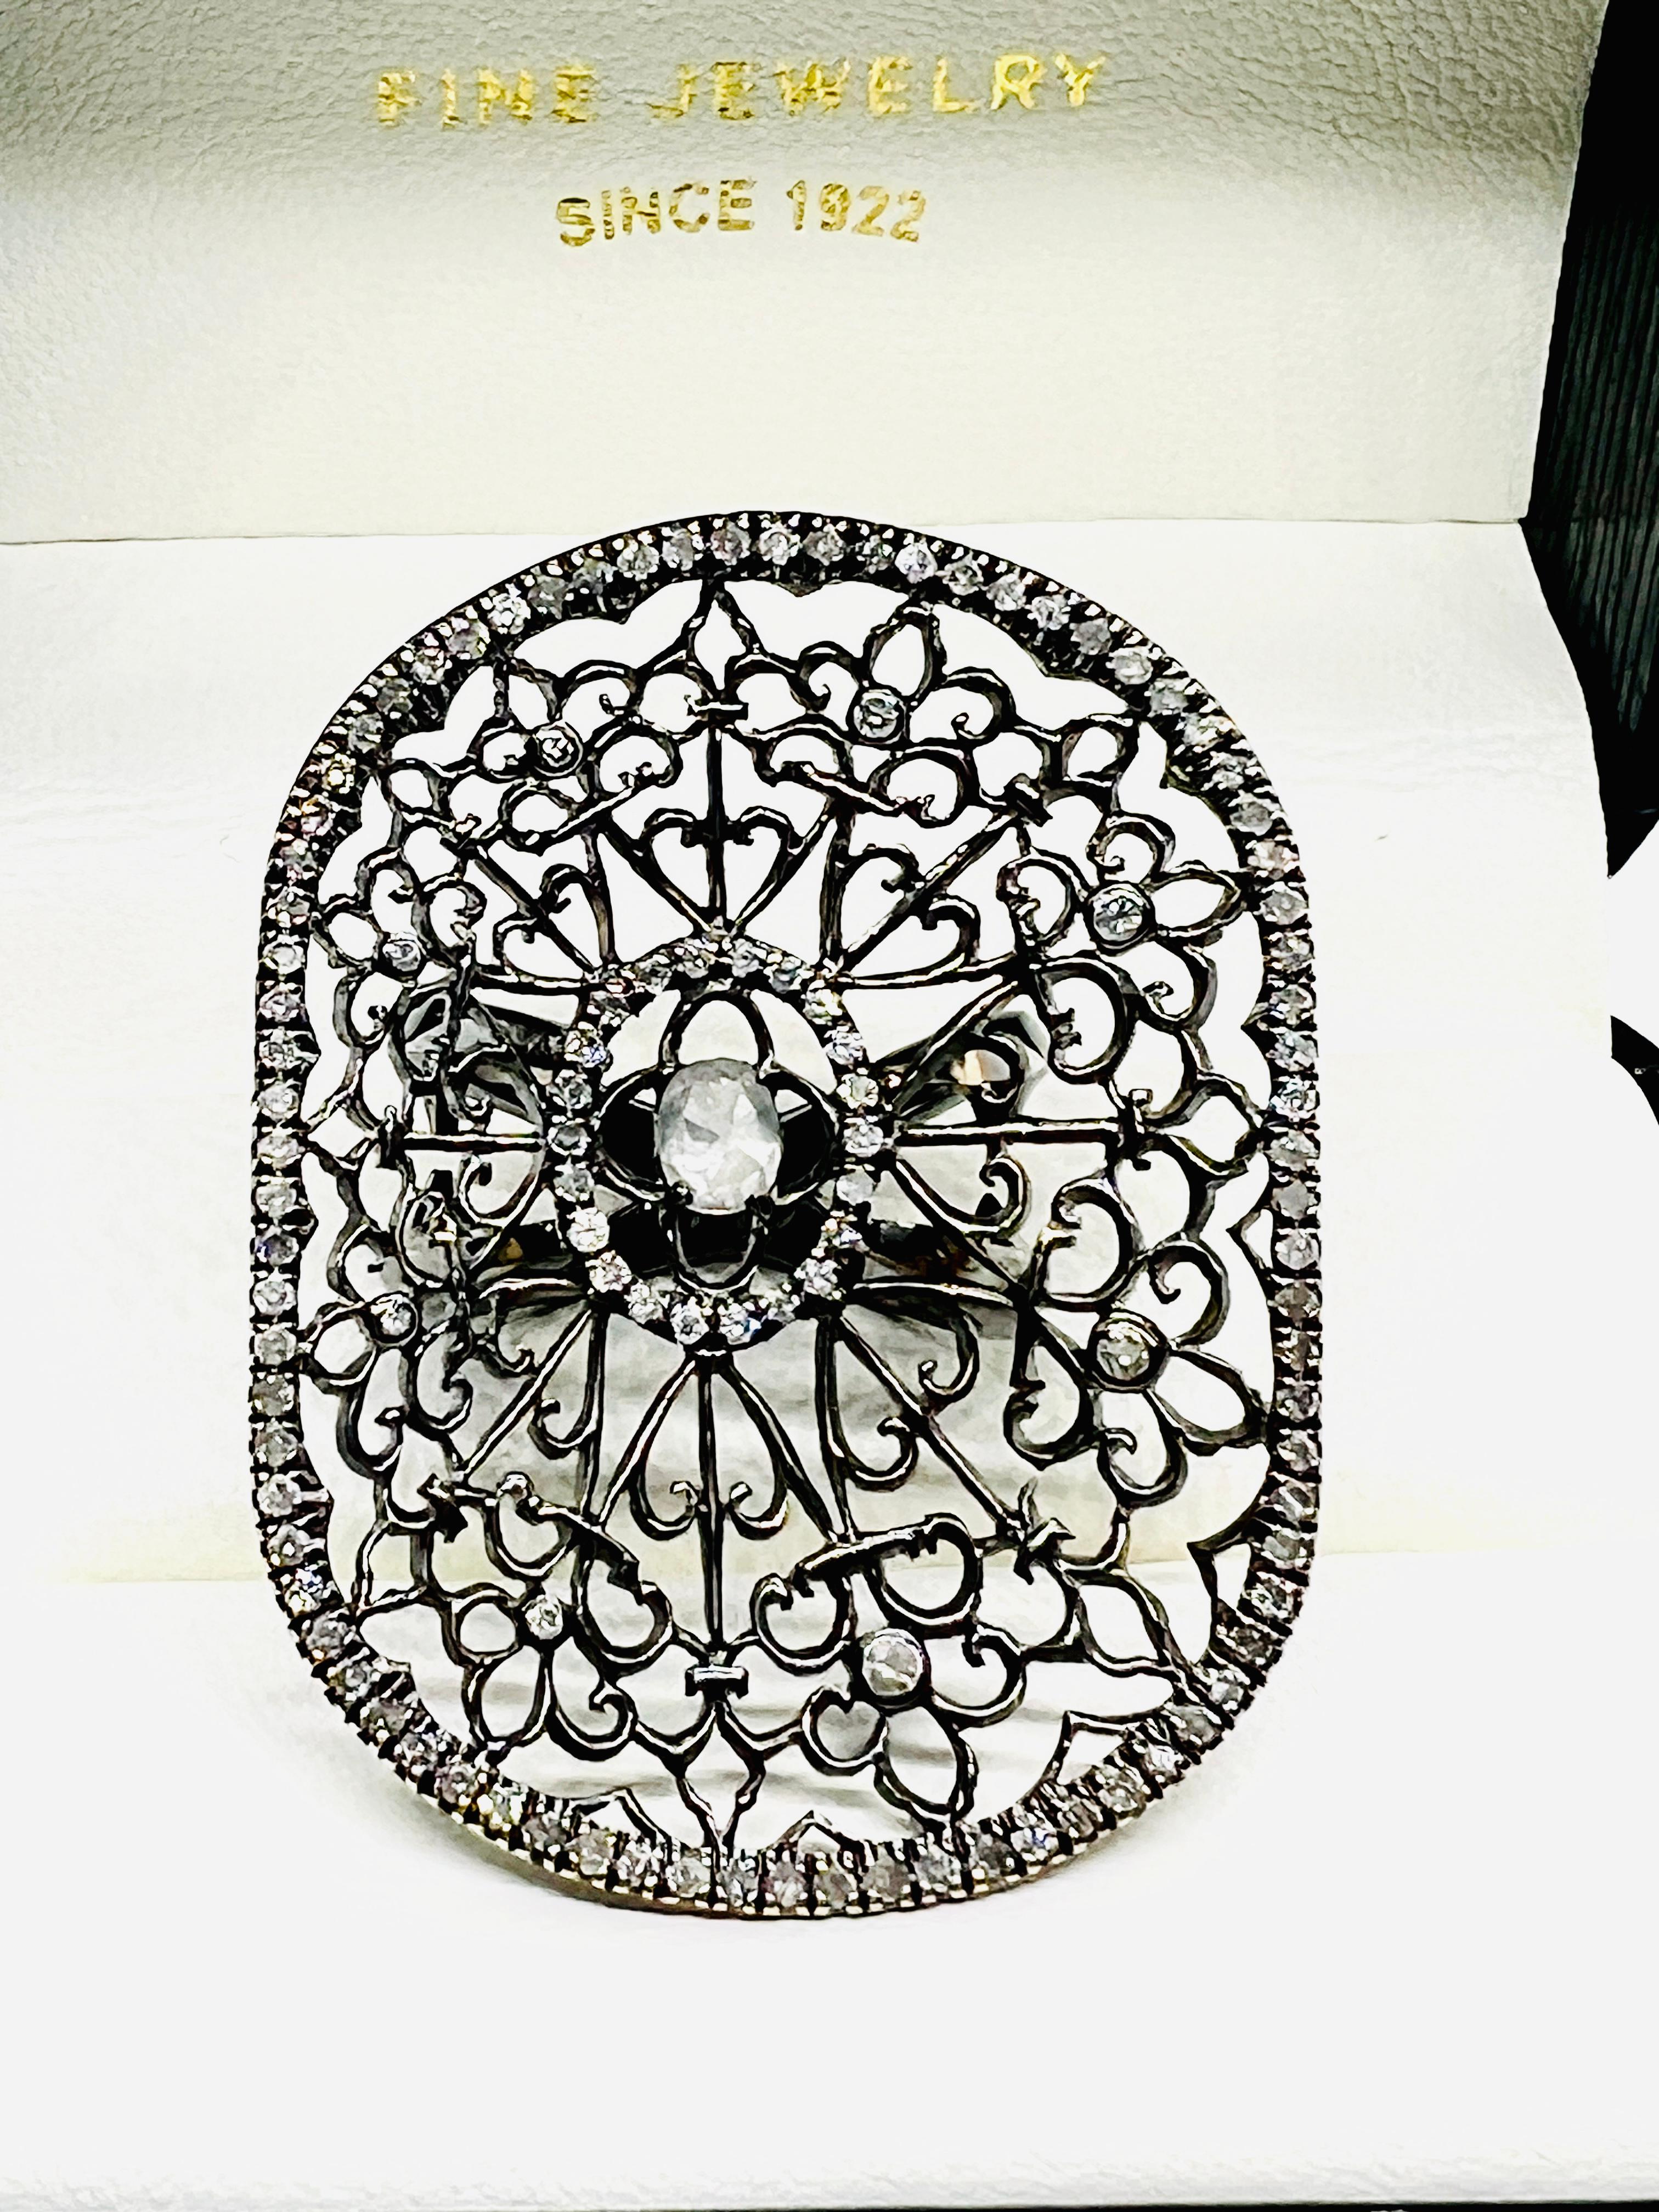 Baroque Designer Loree Rodkin 18K White Gold & Diamond Oval Spider Web Ring Size 7.25 For Sale